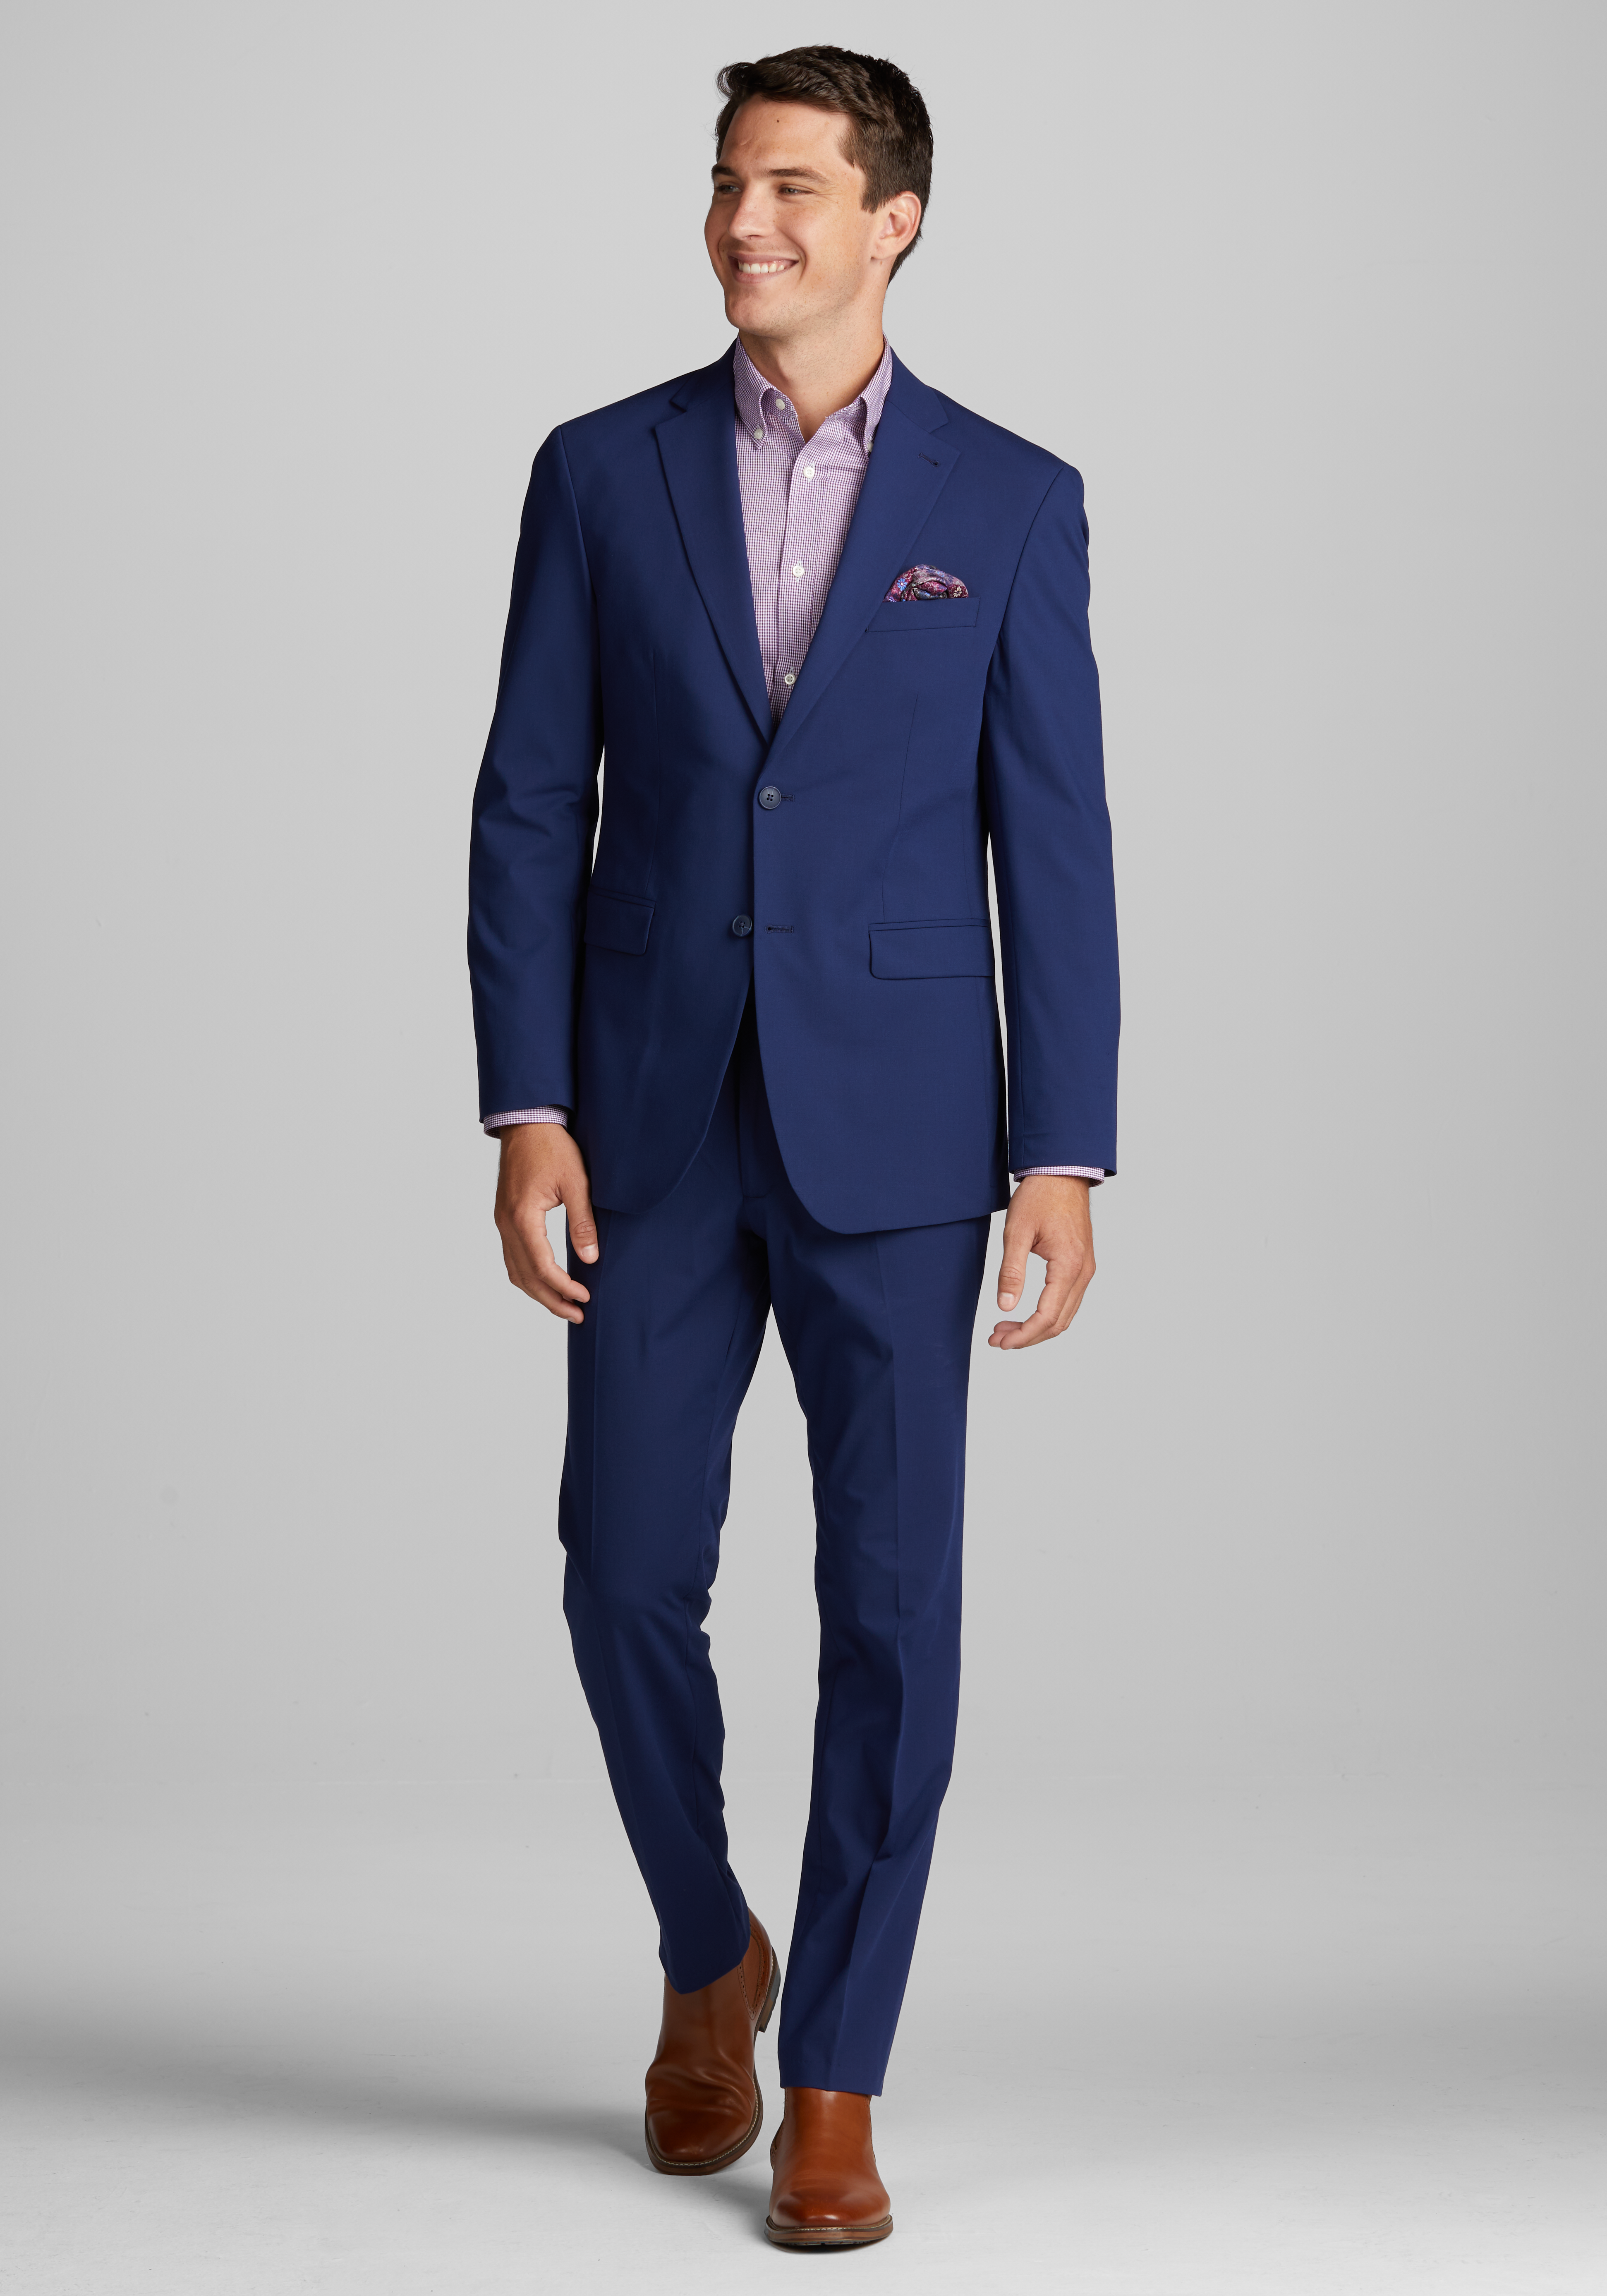 Men's Formal Blazer Coat Wedding Business One-Button Slim Fit Suit Jacket  Grey66